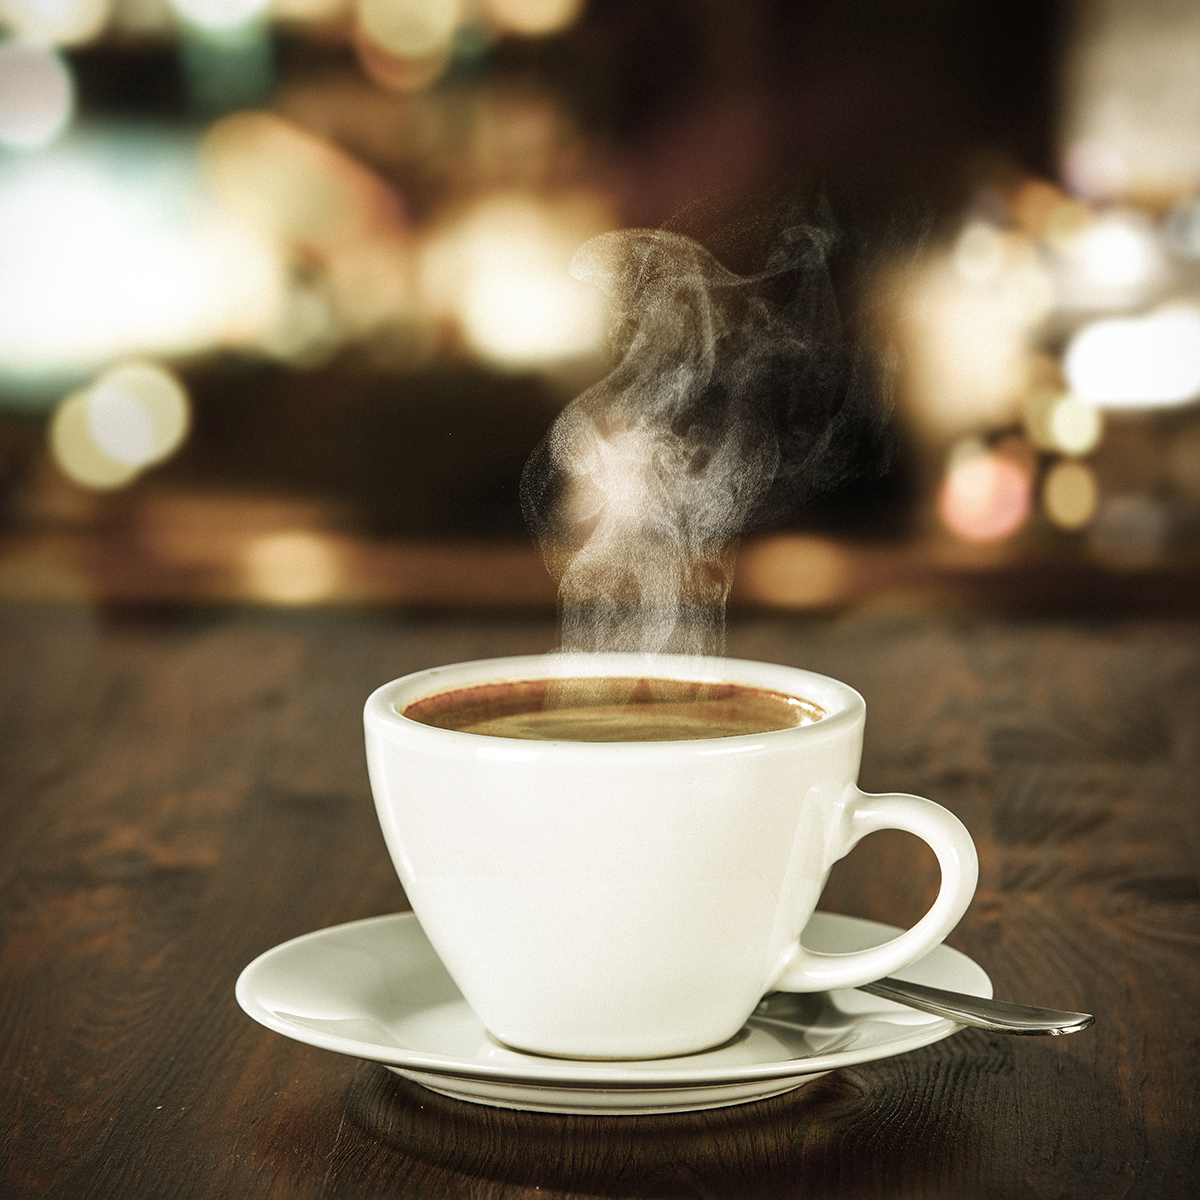 Coffee in a white mug steaming